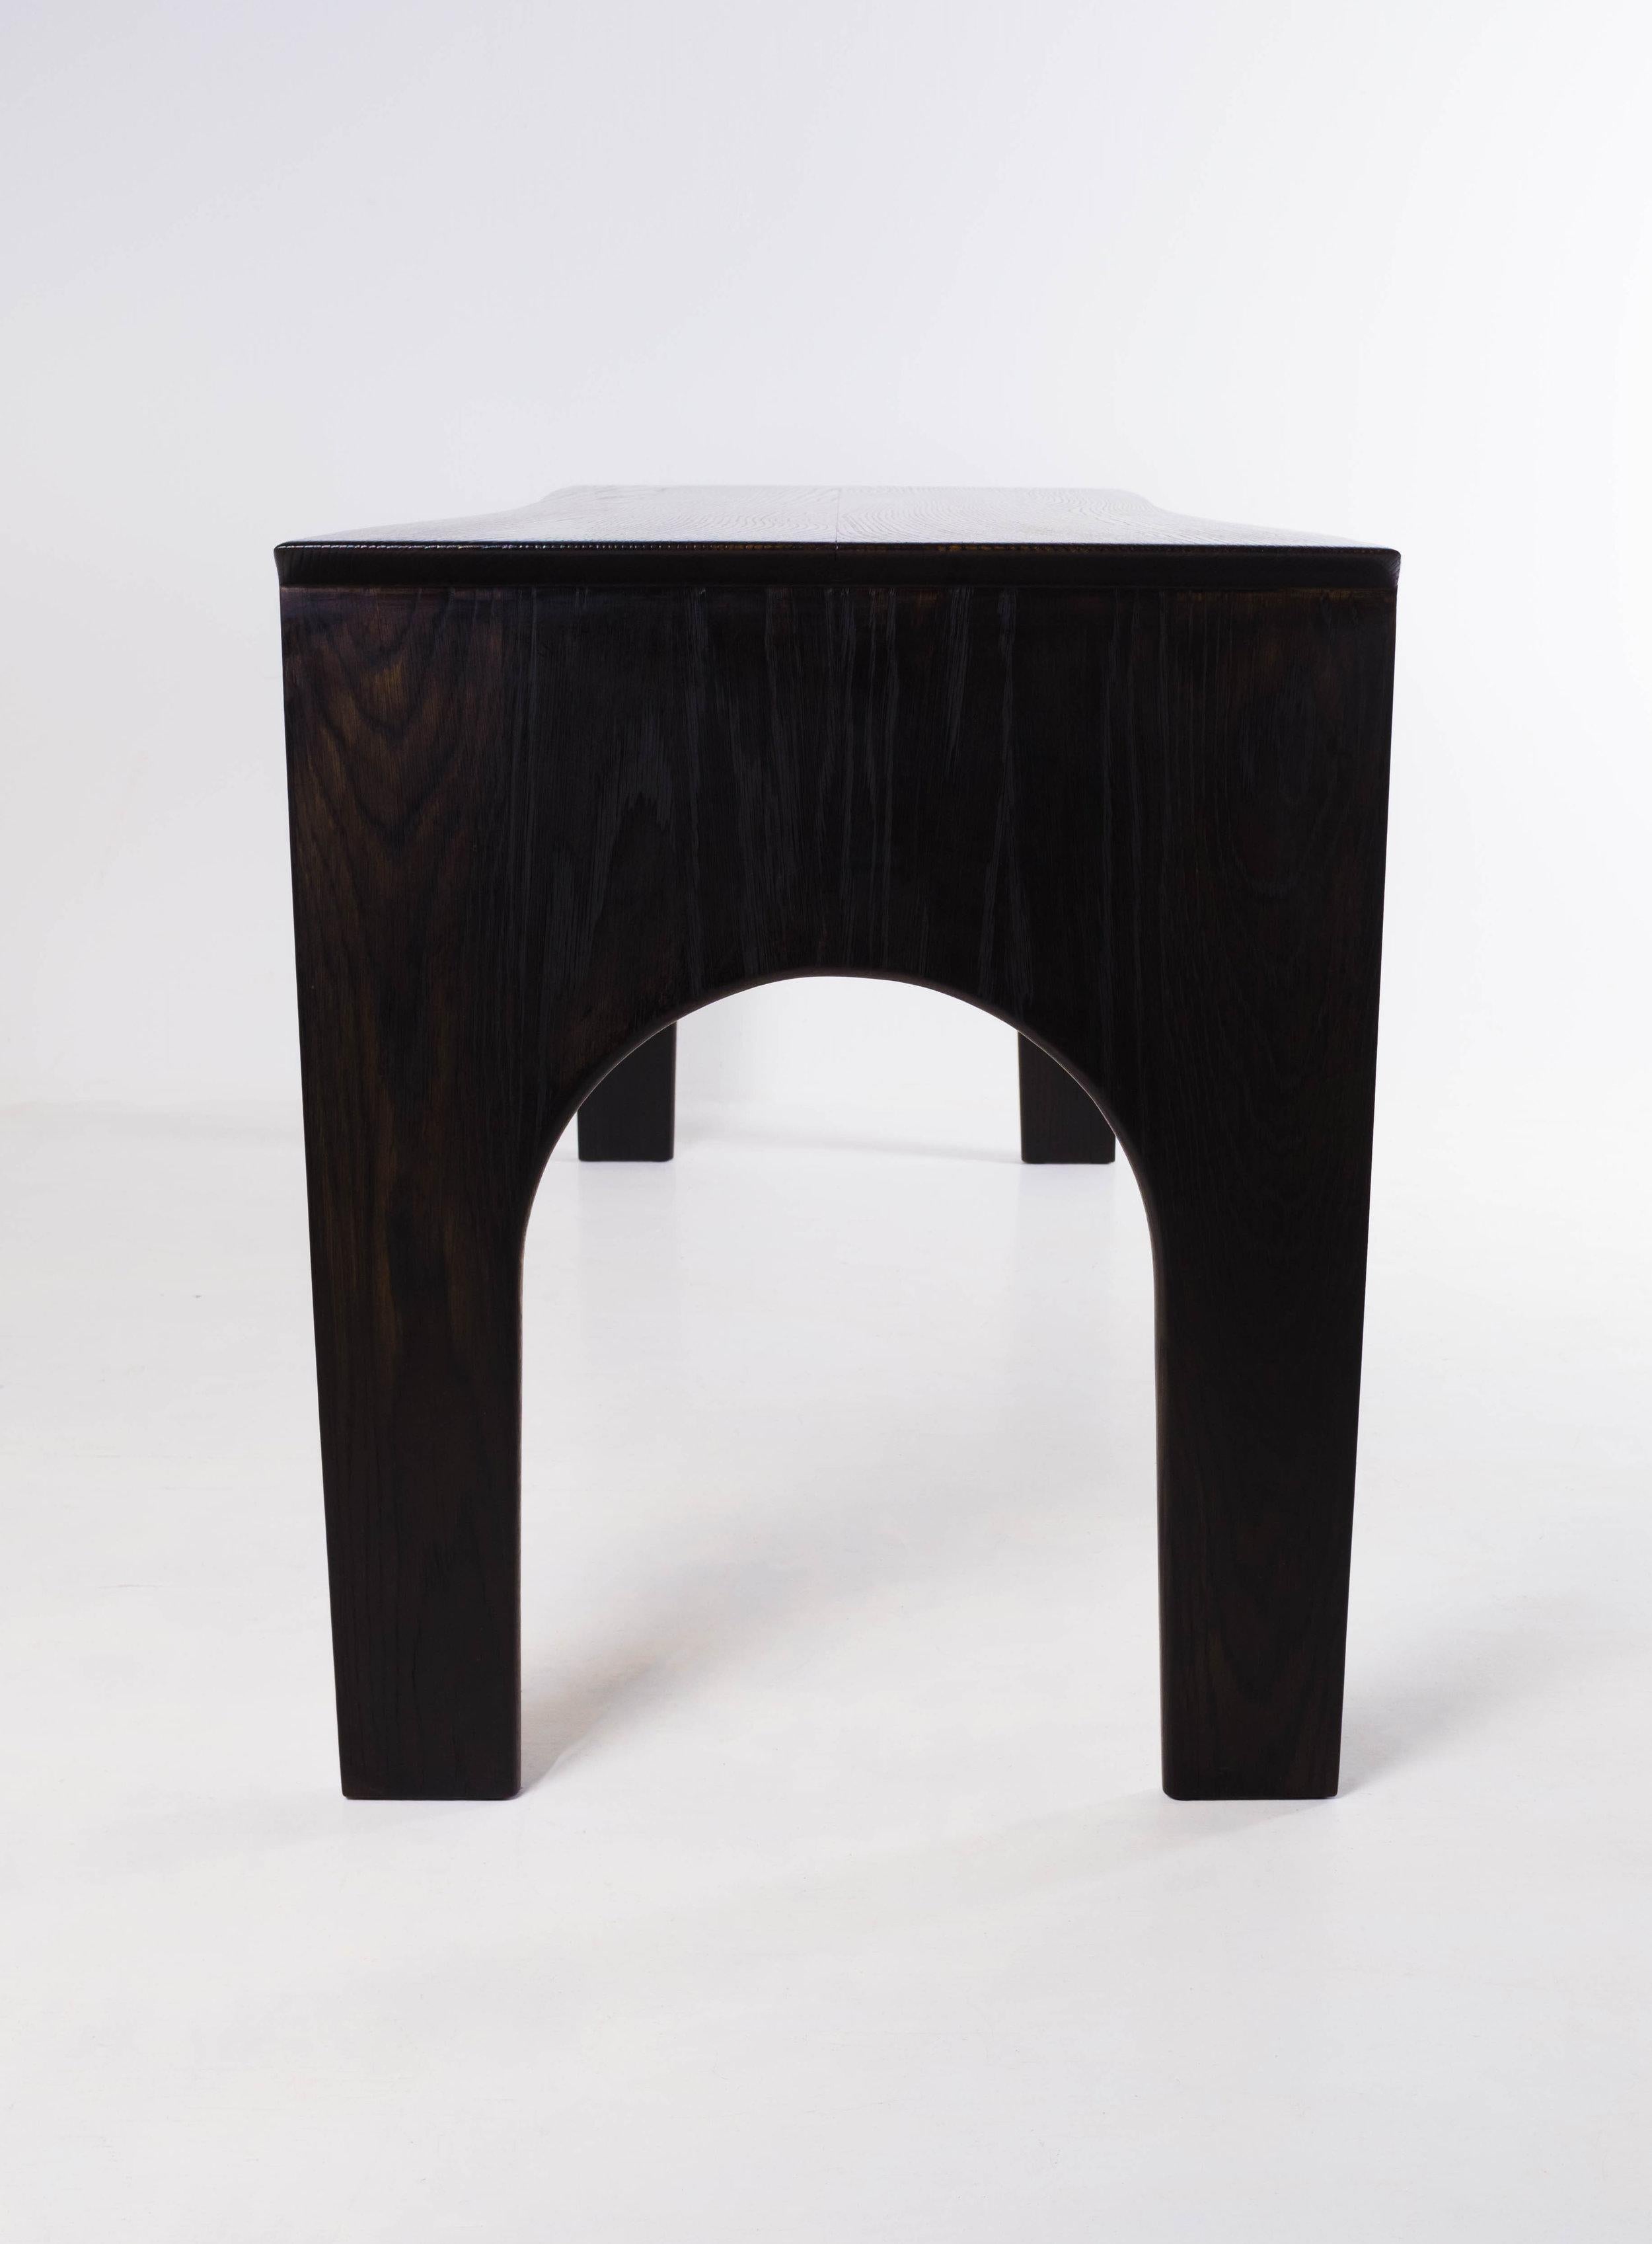 Solid Oak Sculptural Bench by Lukas Cober 2